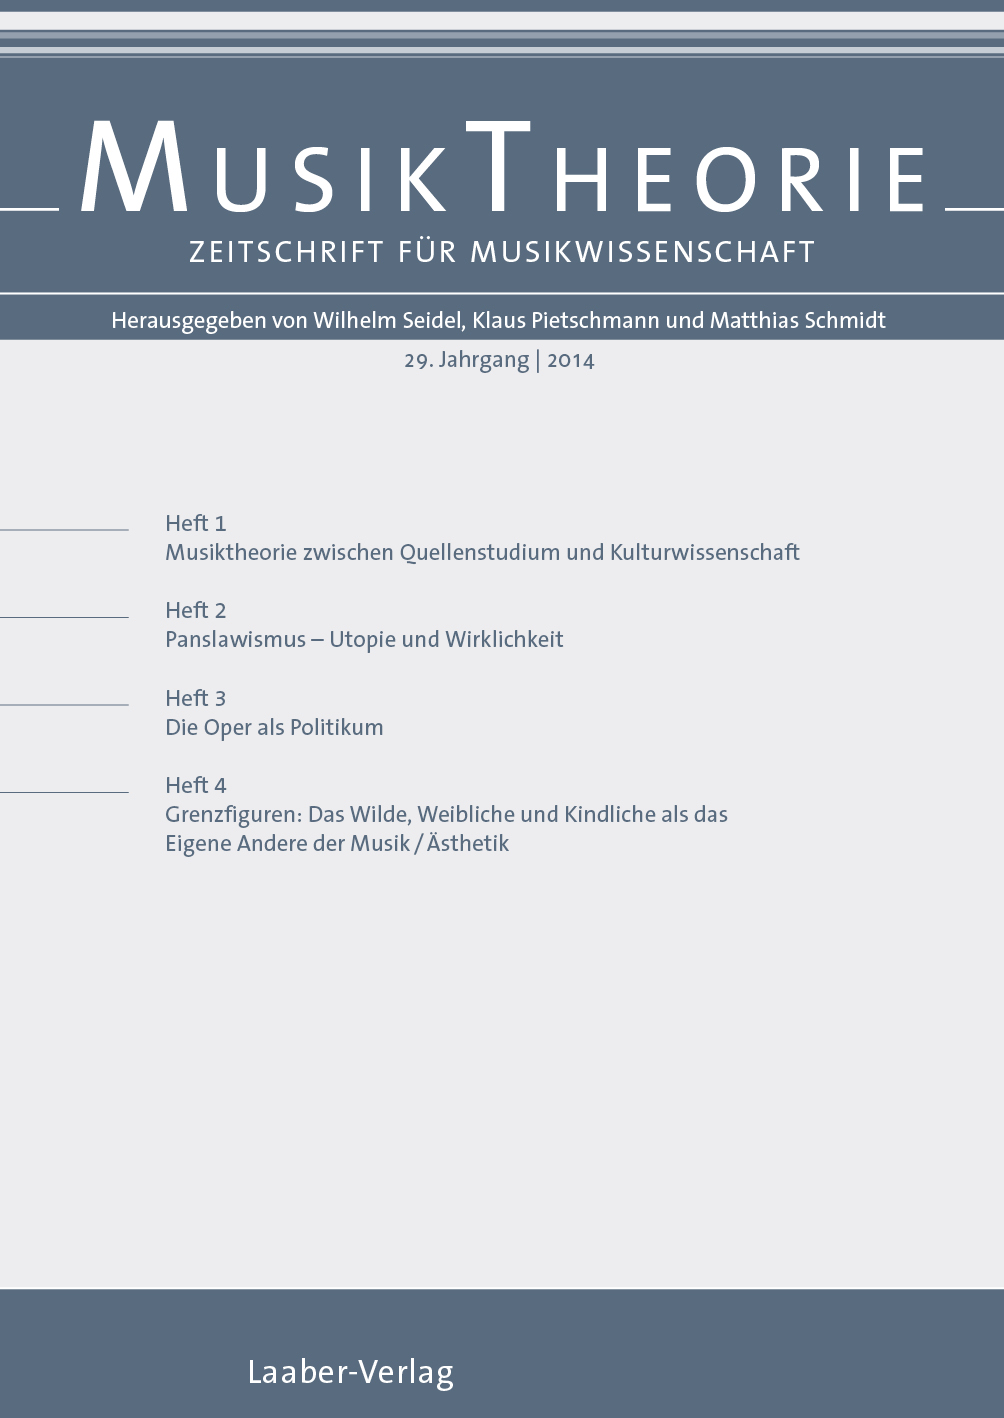 Musiktheorie 2014 (29. Jahrgang)